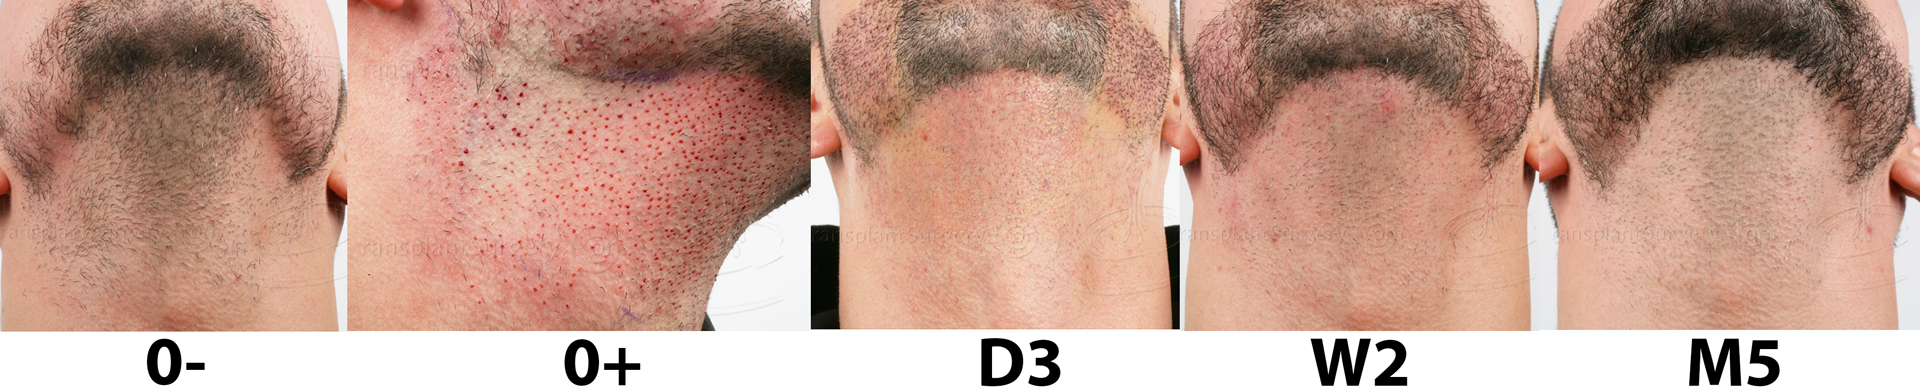 Dr.Devroye-HTS-Clinic-1011-FUE-Beard-Montage4.jpg